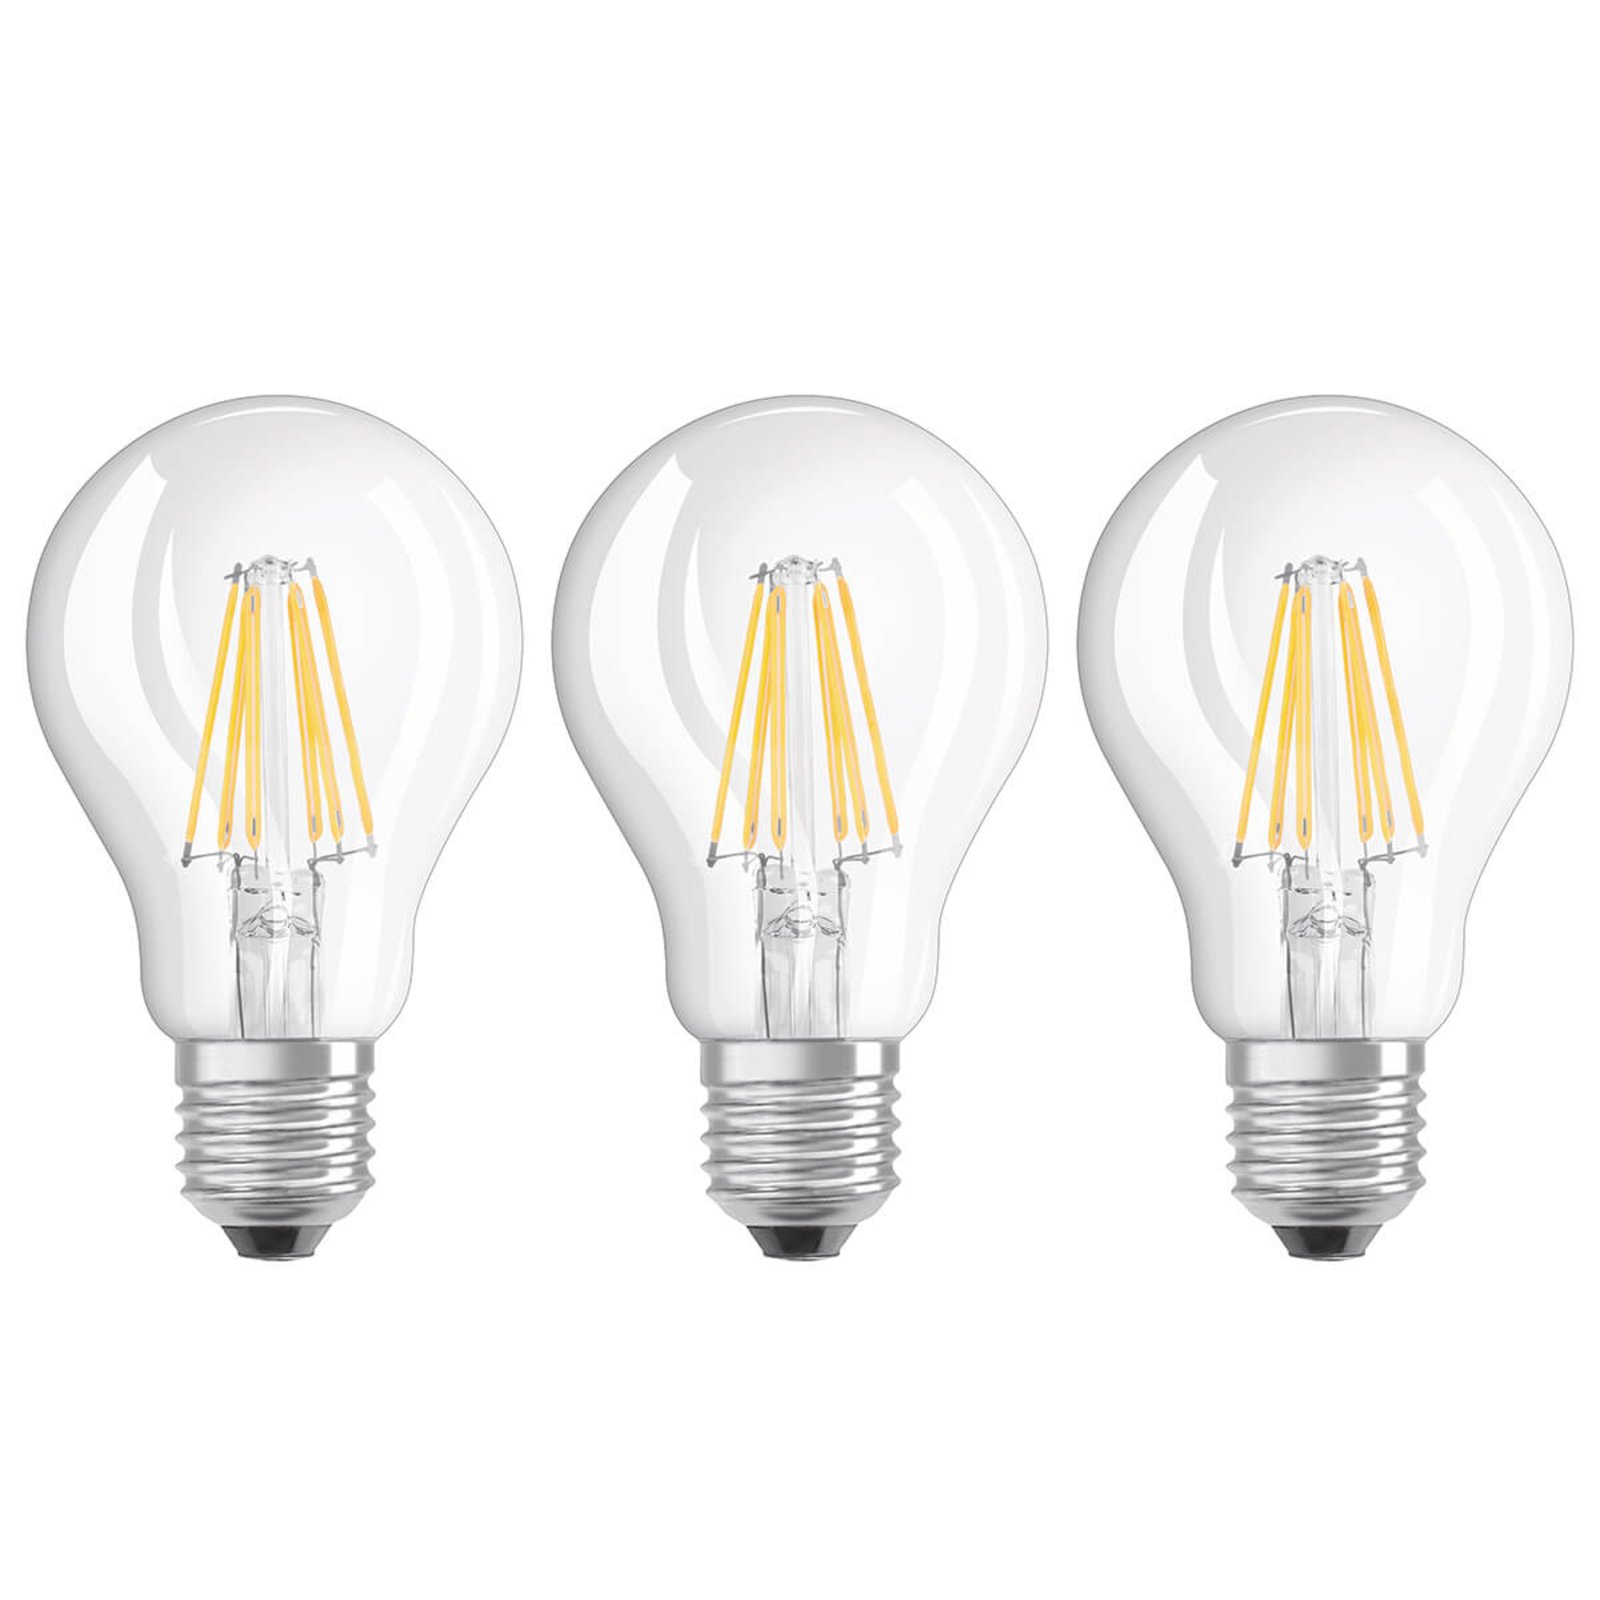 LED filament bulb E27 6 W, warm white, set of 3